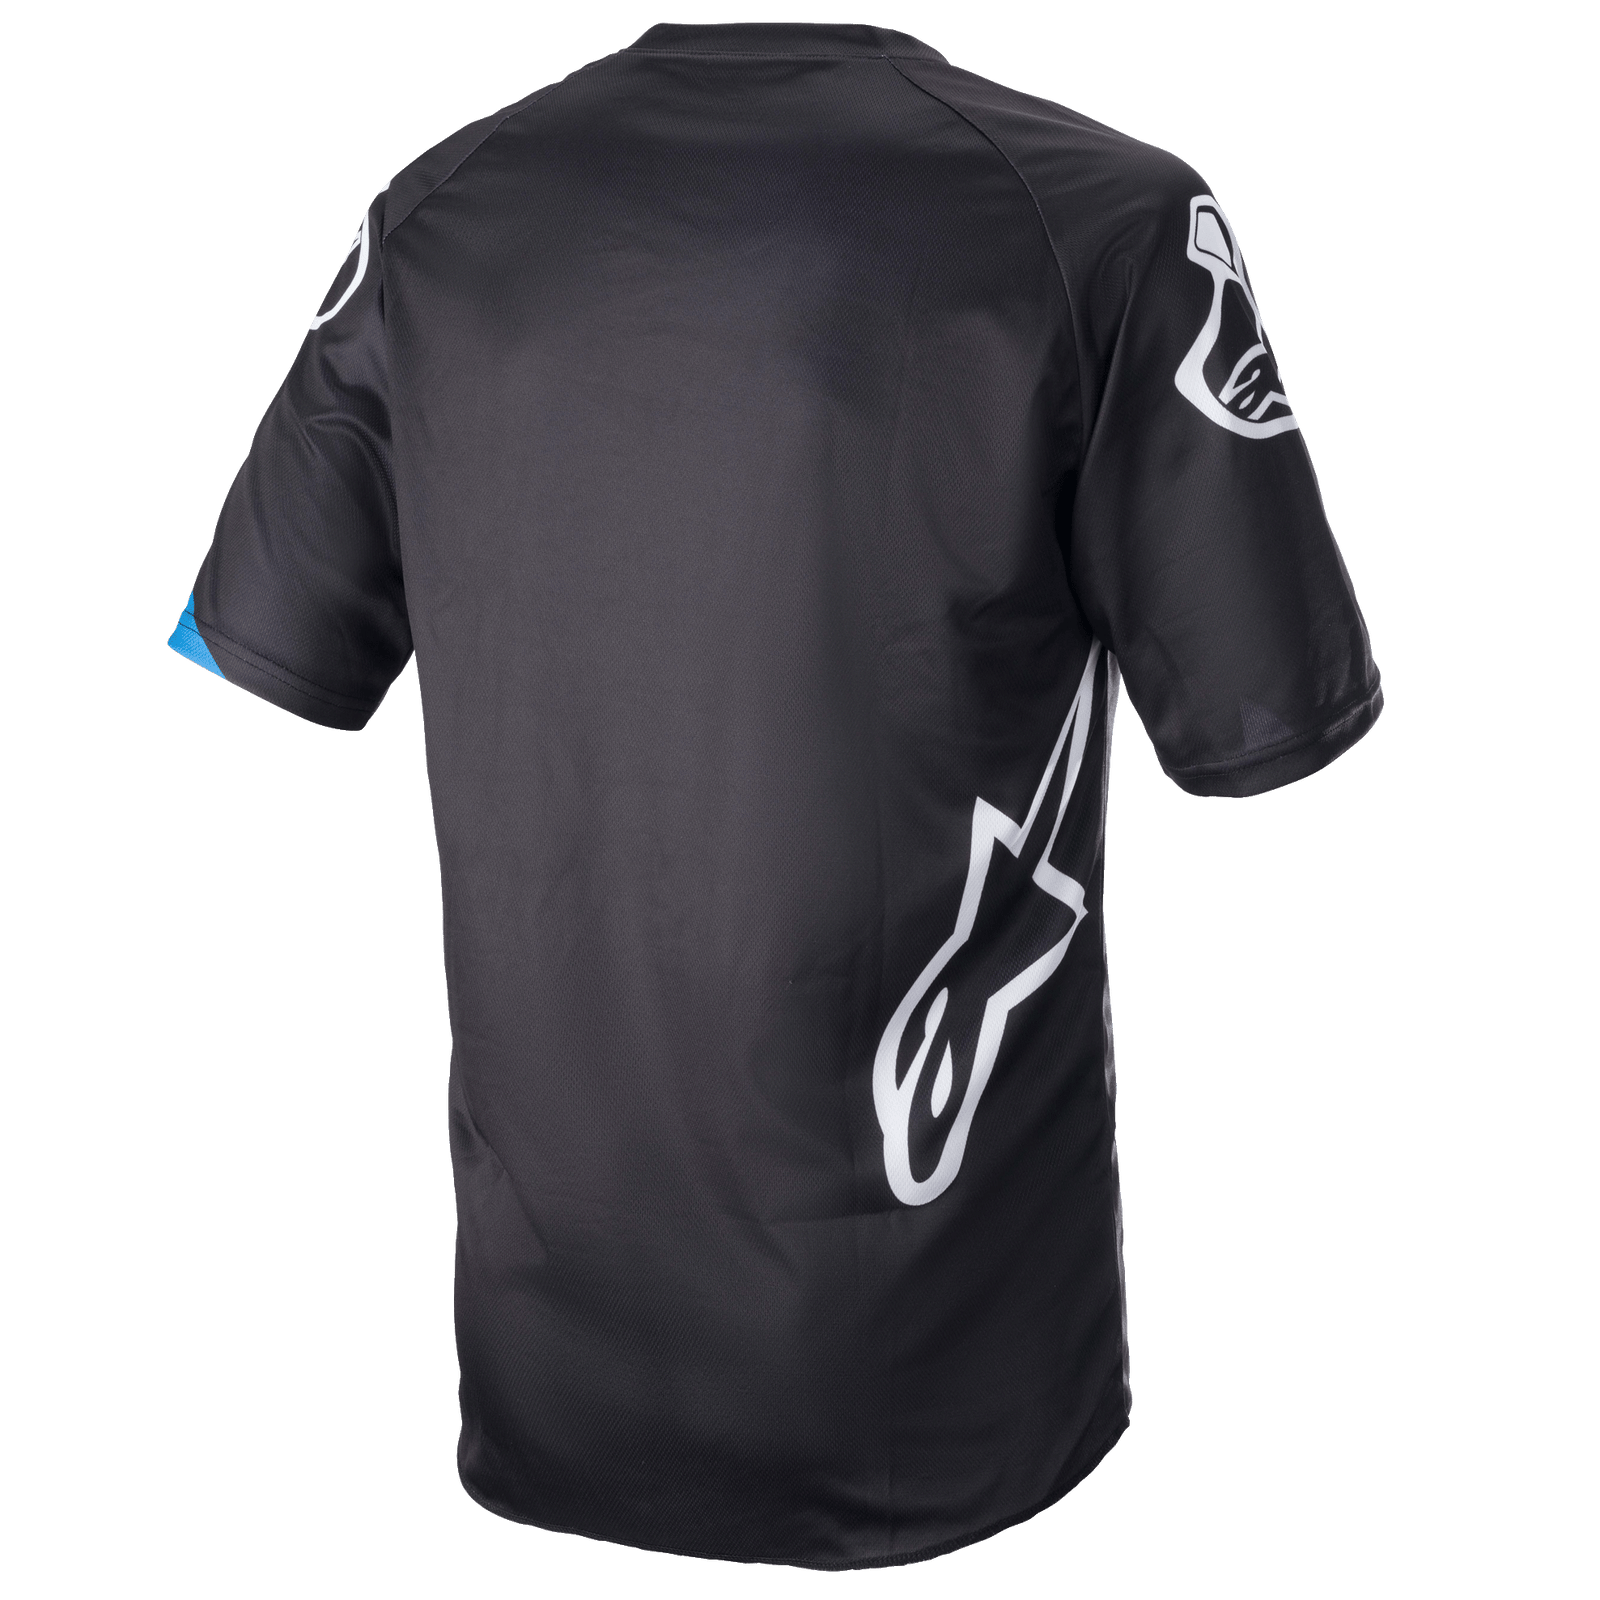 Racer V3 Jersey - Short Sleeve